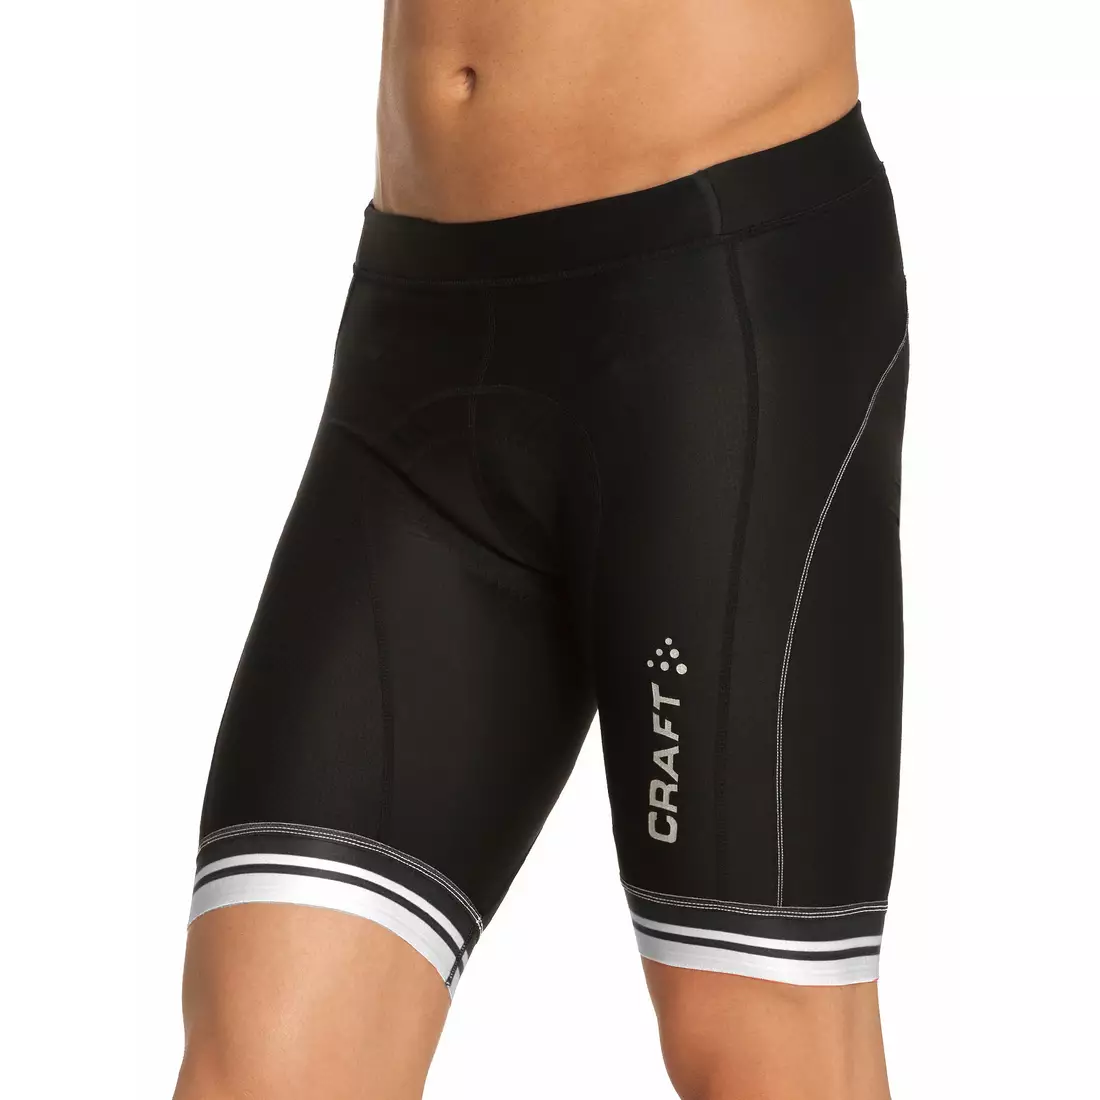 CRAFT Performance men's cycling shorts, 1902590-9900